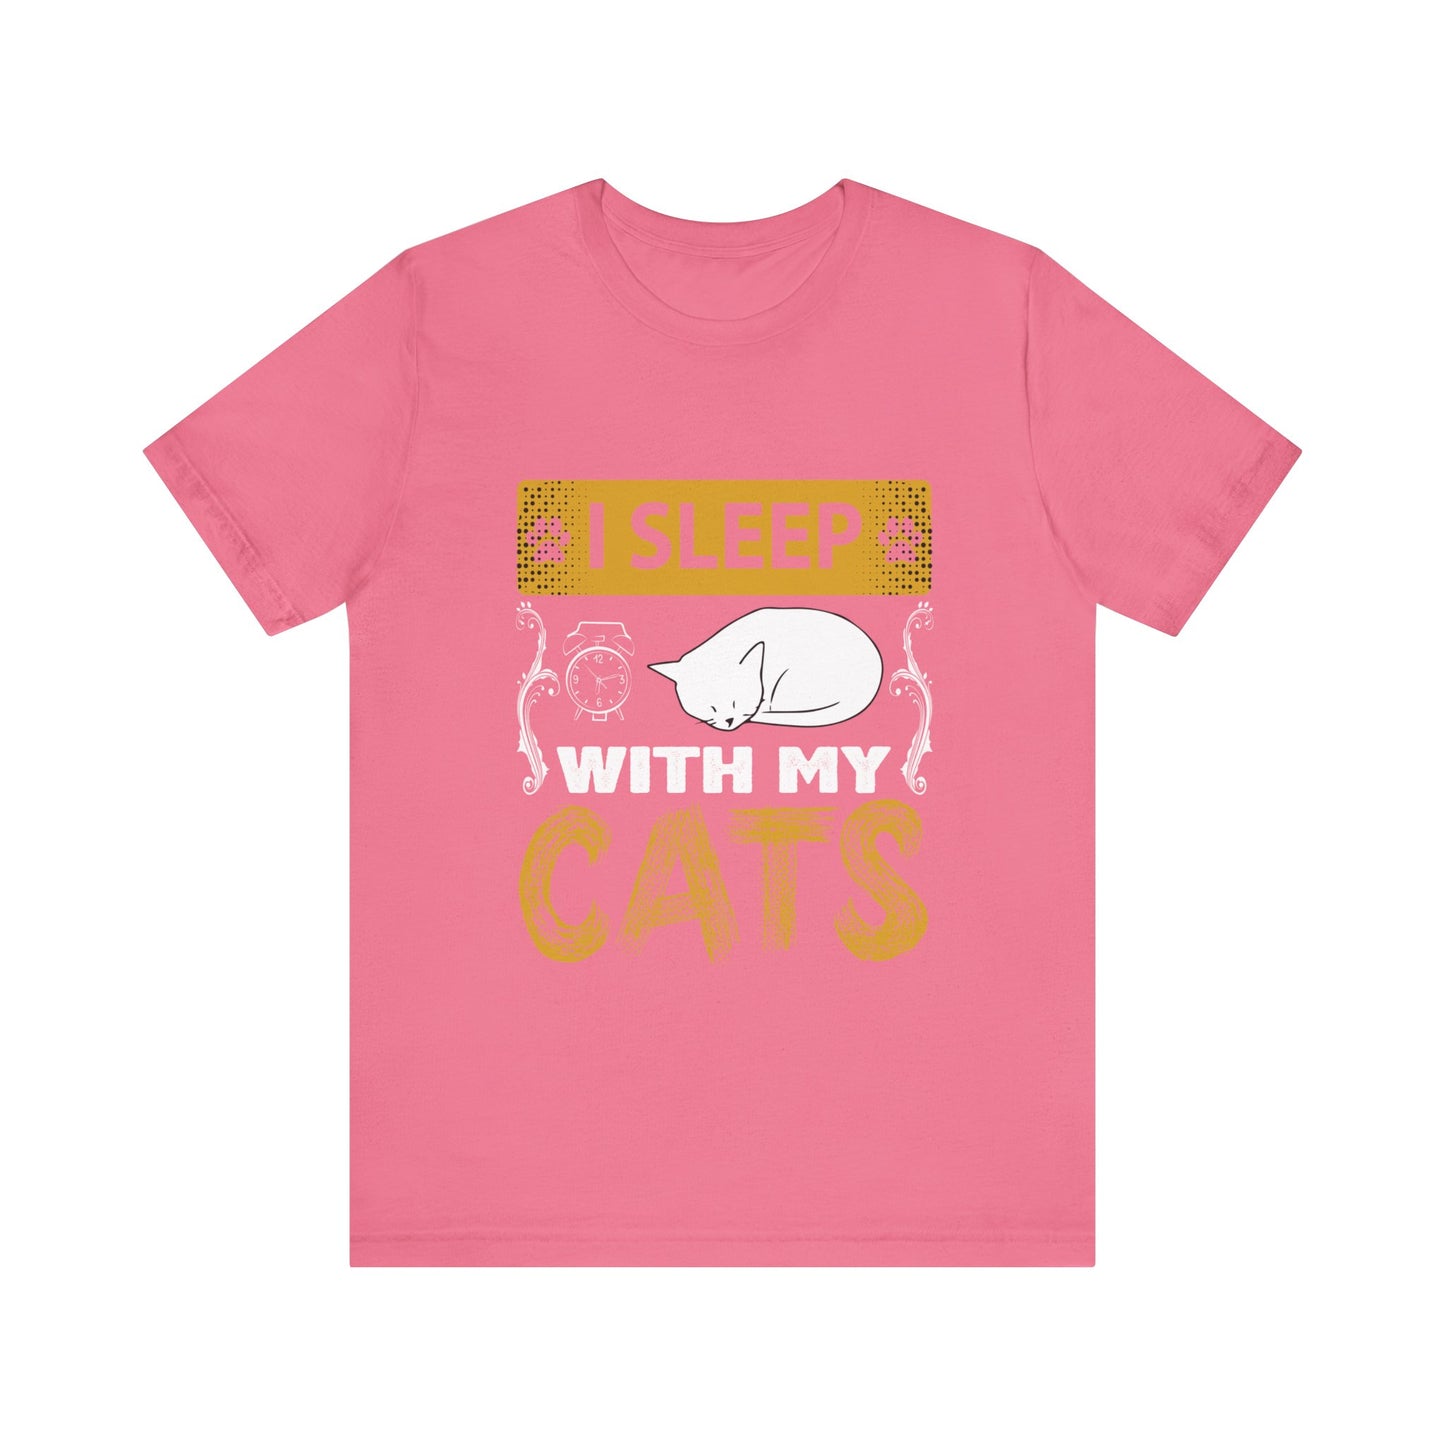 I Sleep With My Cats 2 - Unisex T-Shirt